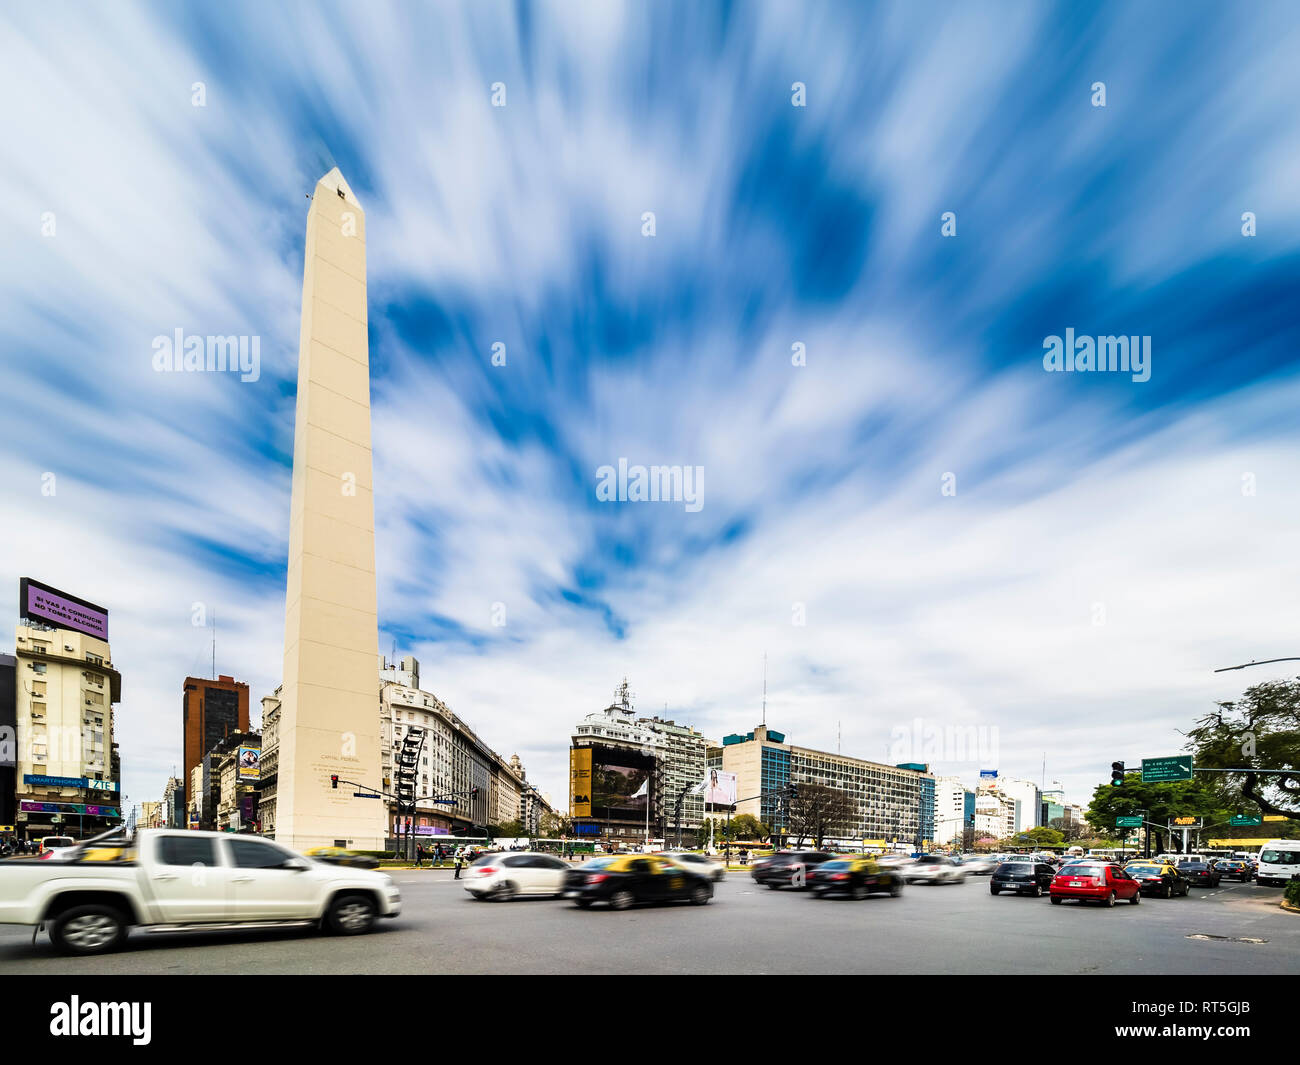 Argentine, Buenos Aires, Stadtzentrum mit starkem obélisque und Verkehr, Avenida 9 de Julio an der Plaza de la Republica Banque D'Images